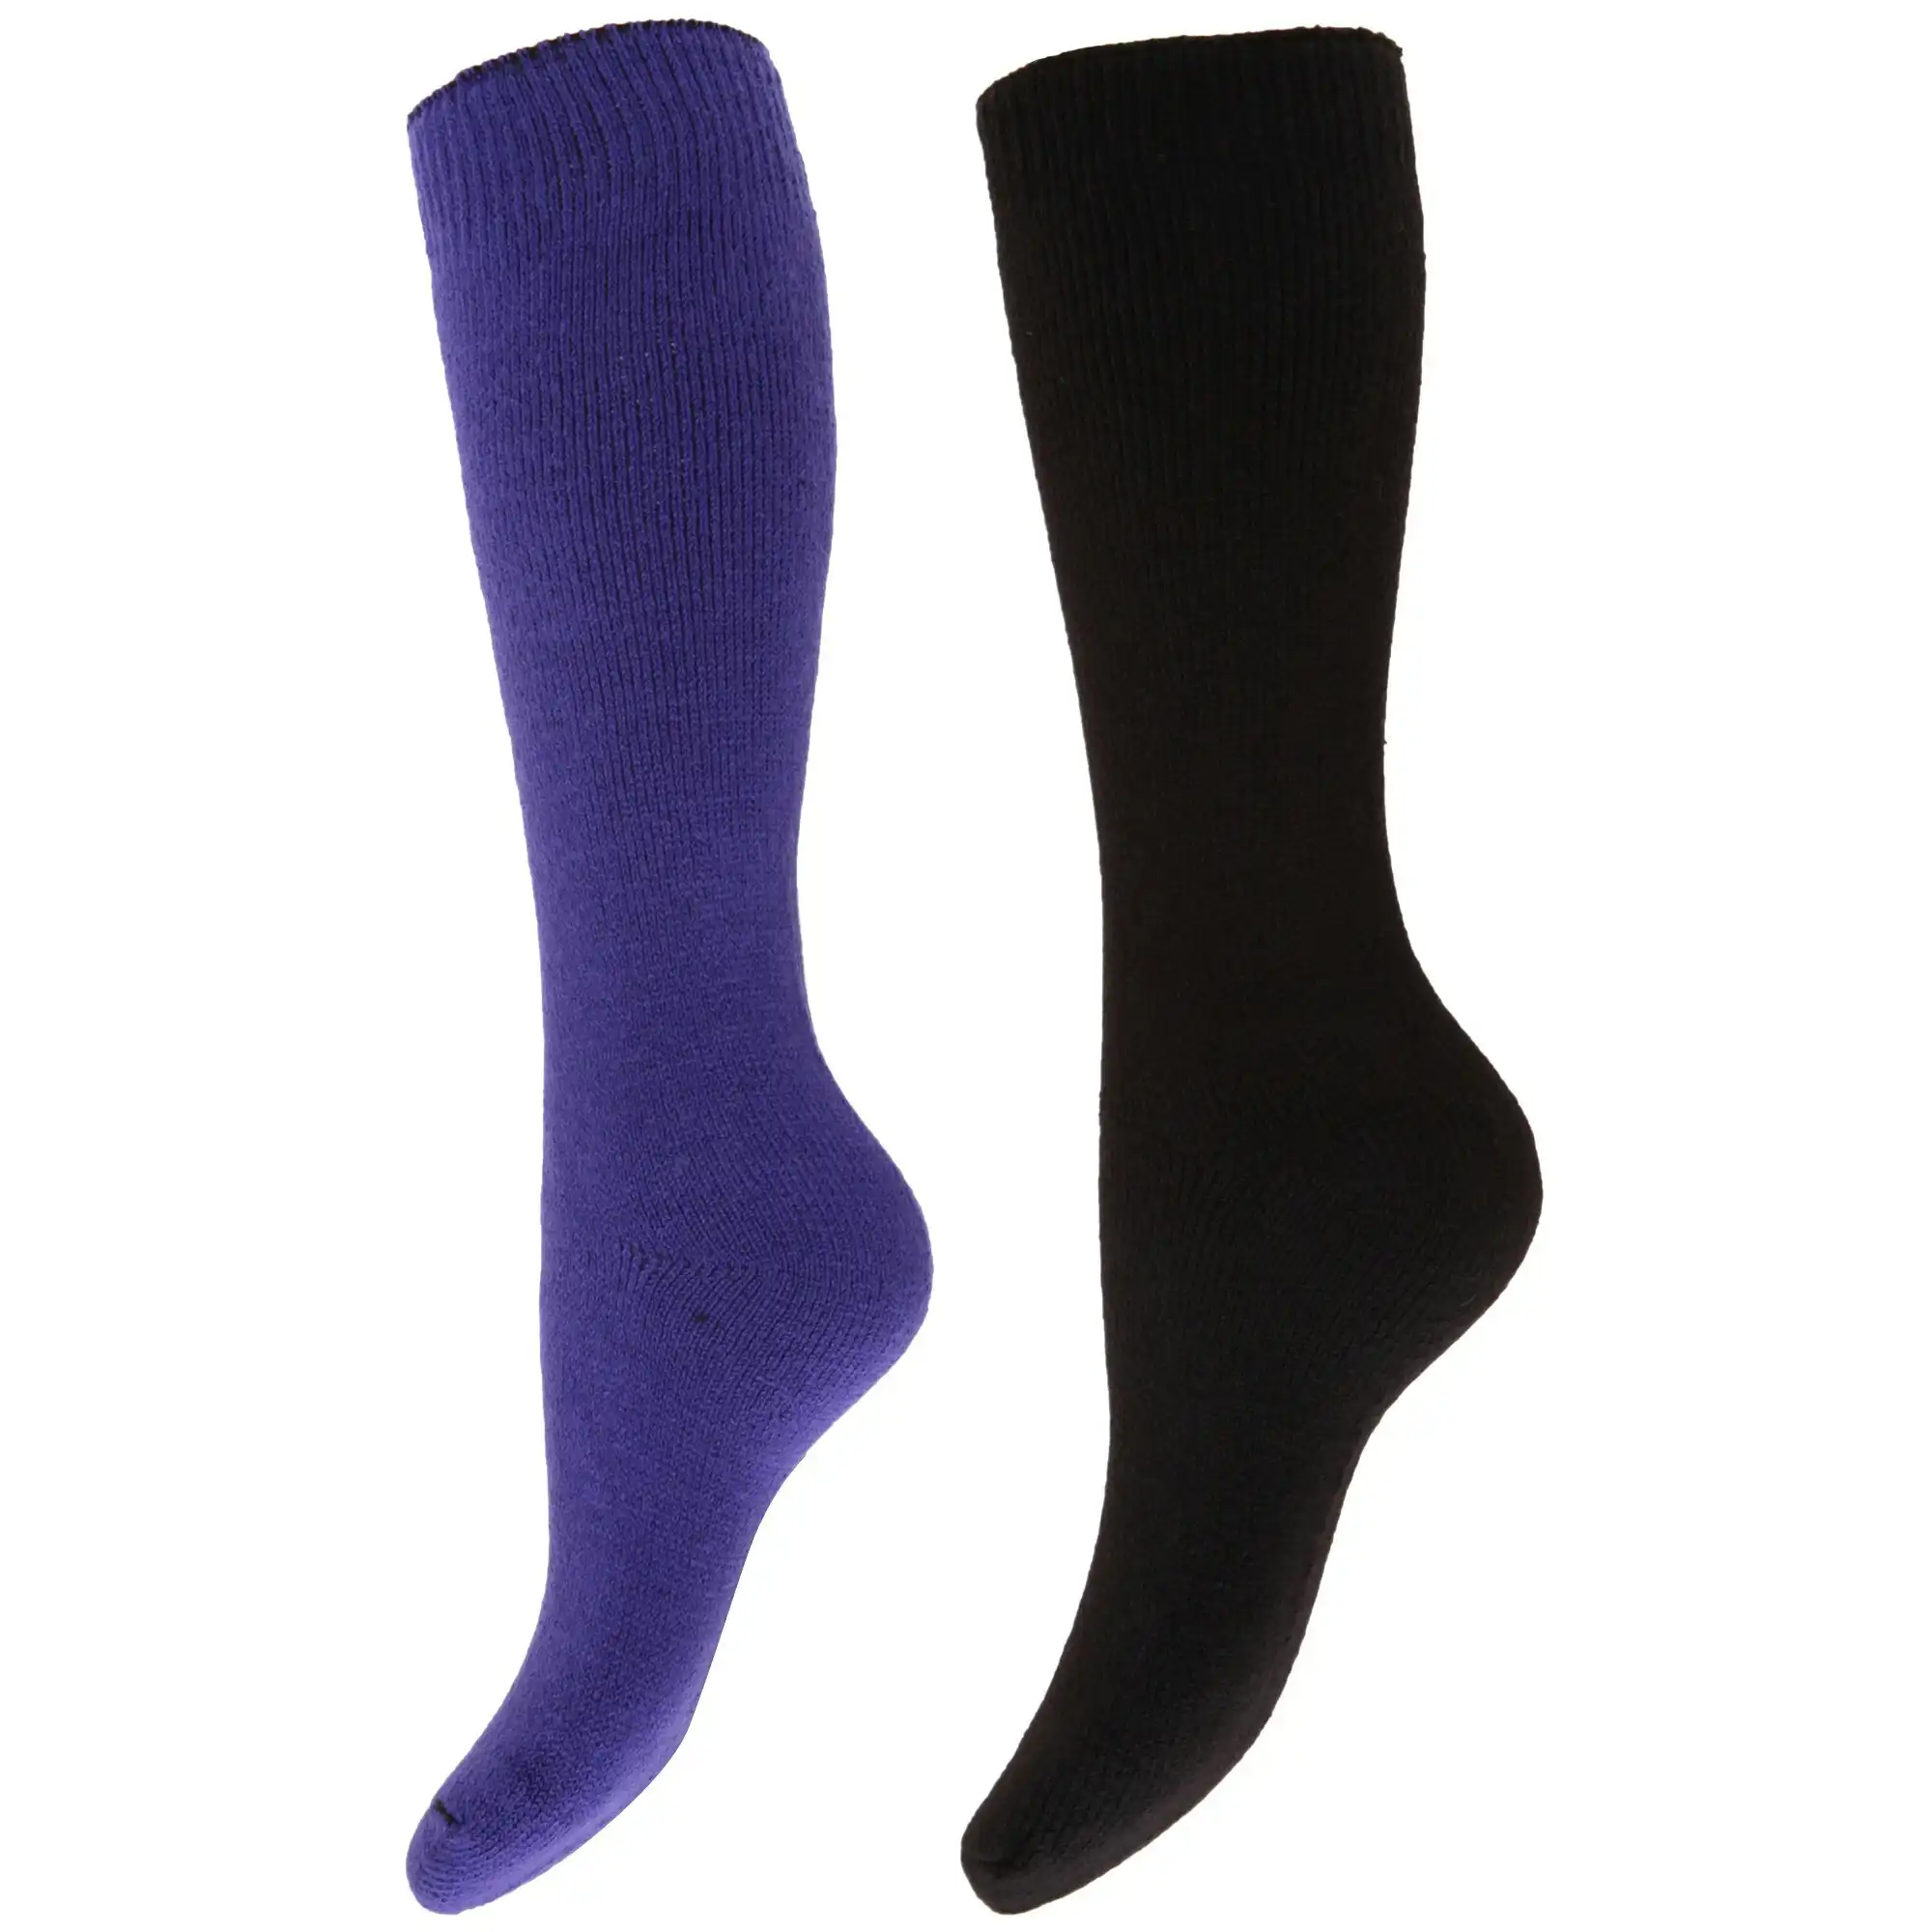 Floso Womens/Ladies Thermal Winter Wellington/Welly Boot Socks (2 Pairs)